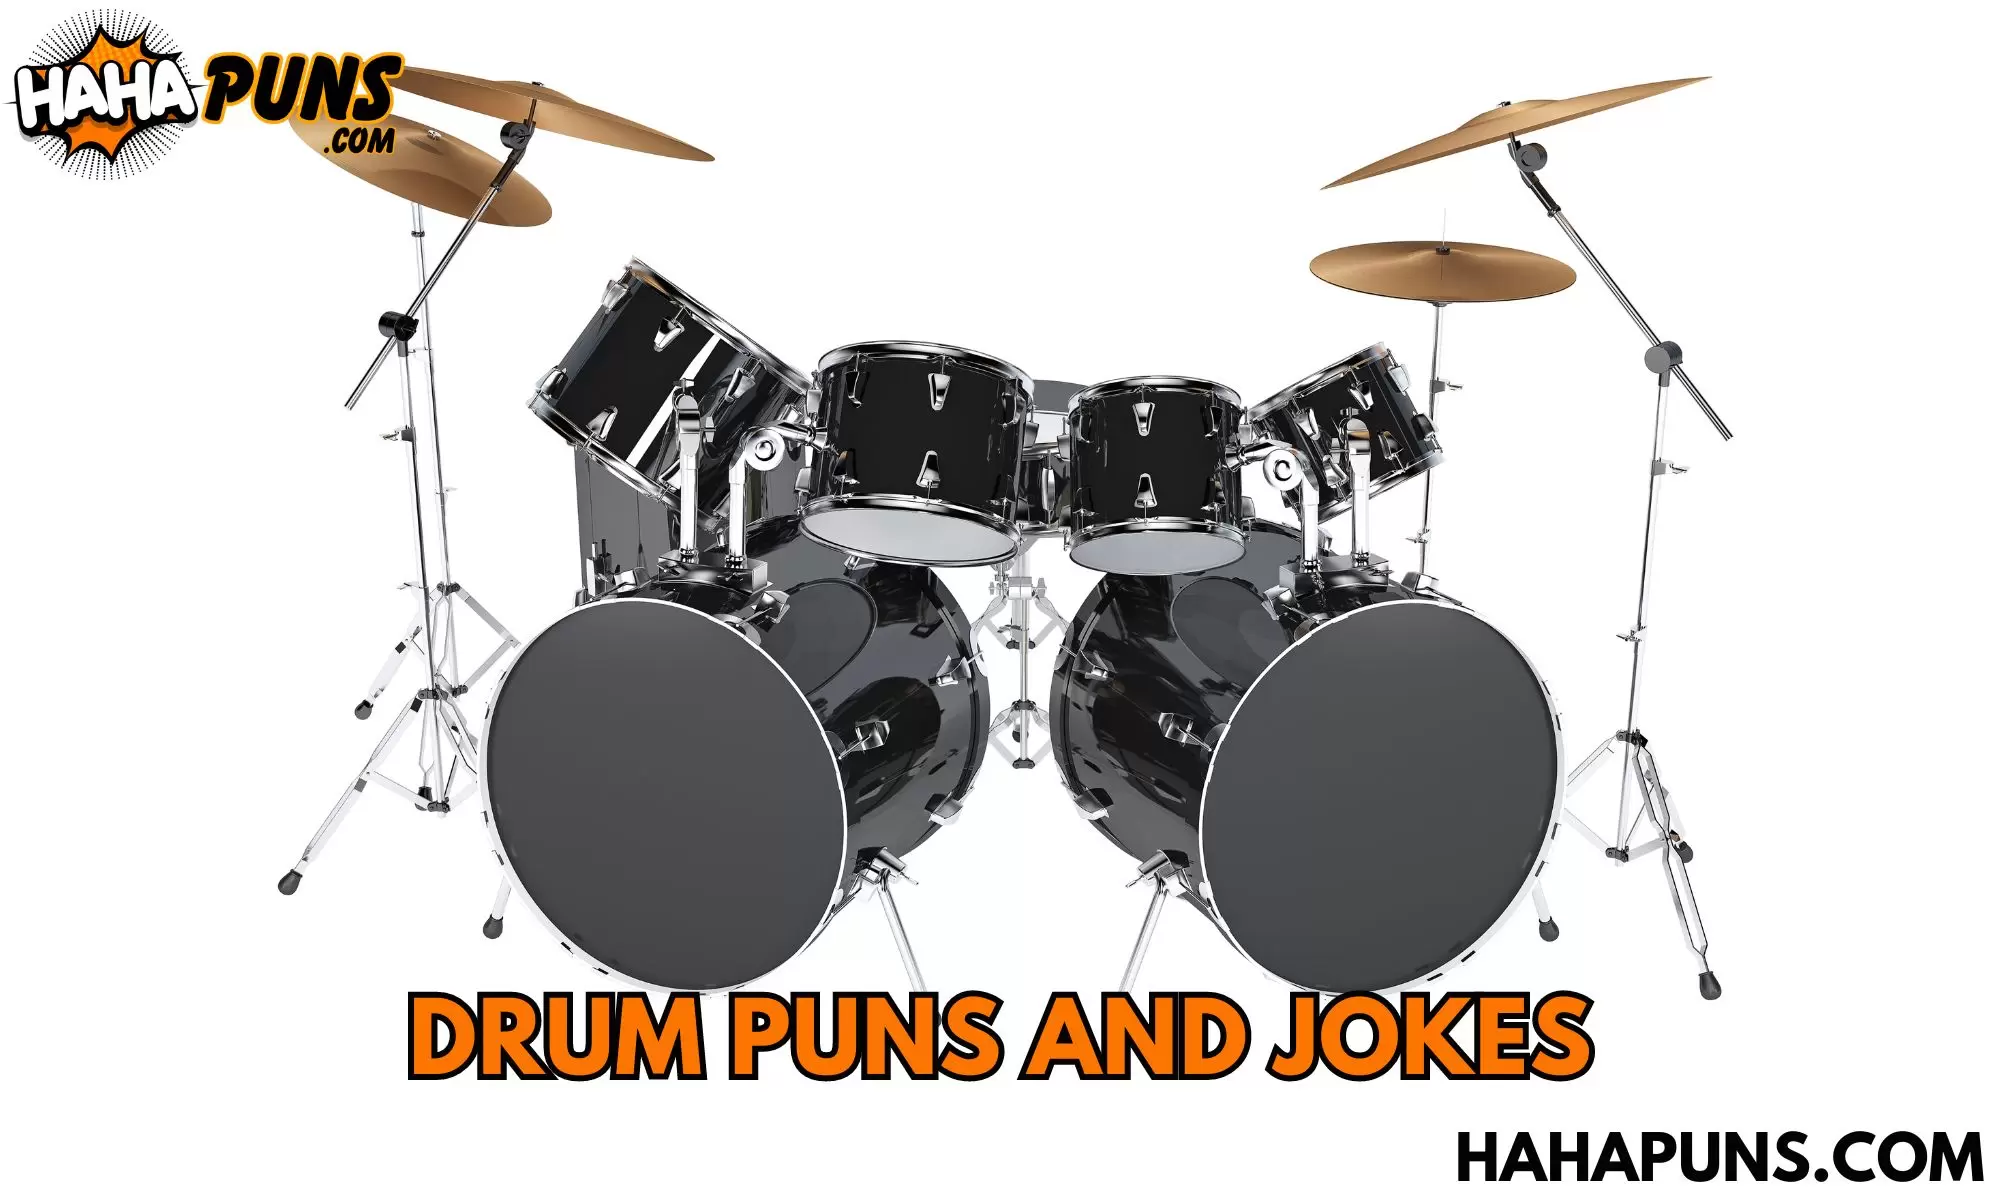 Drum Puns And Jokes